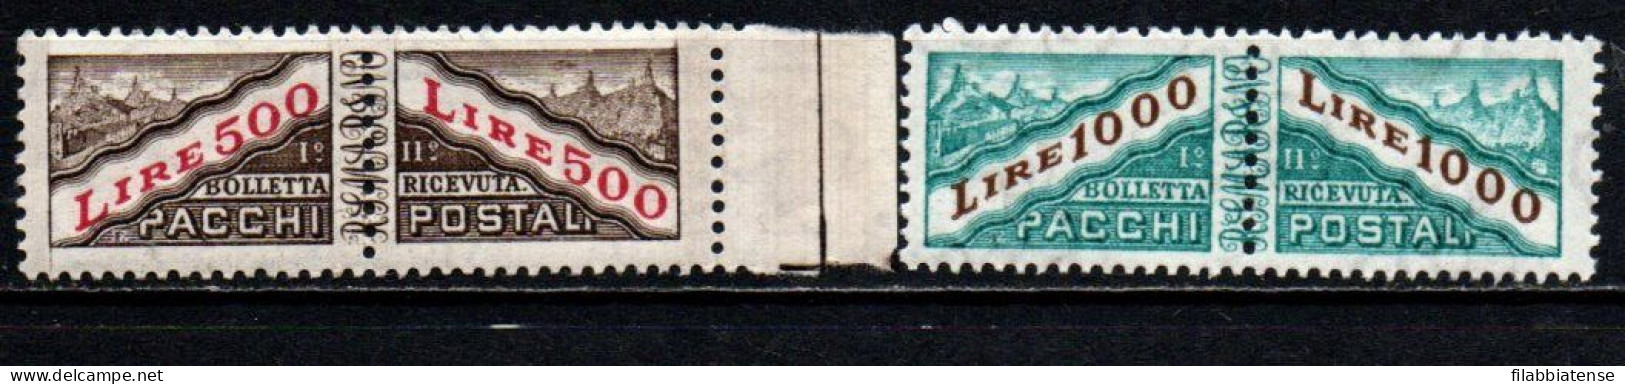 1967 - San Marino PP 46/PP 47 Pacchi Postali   +++++++++ - Unused Stamps